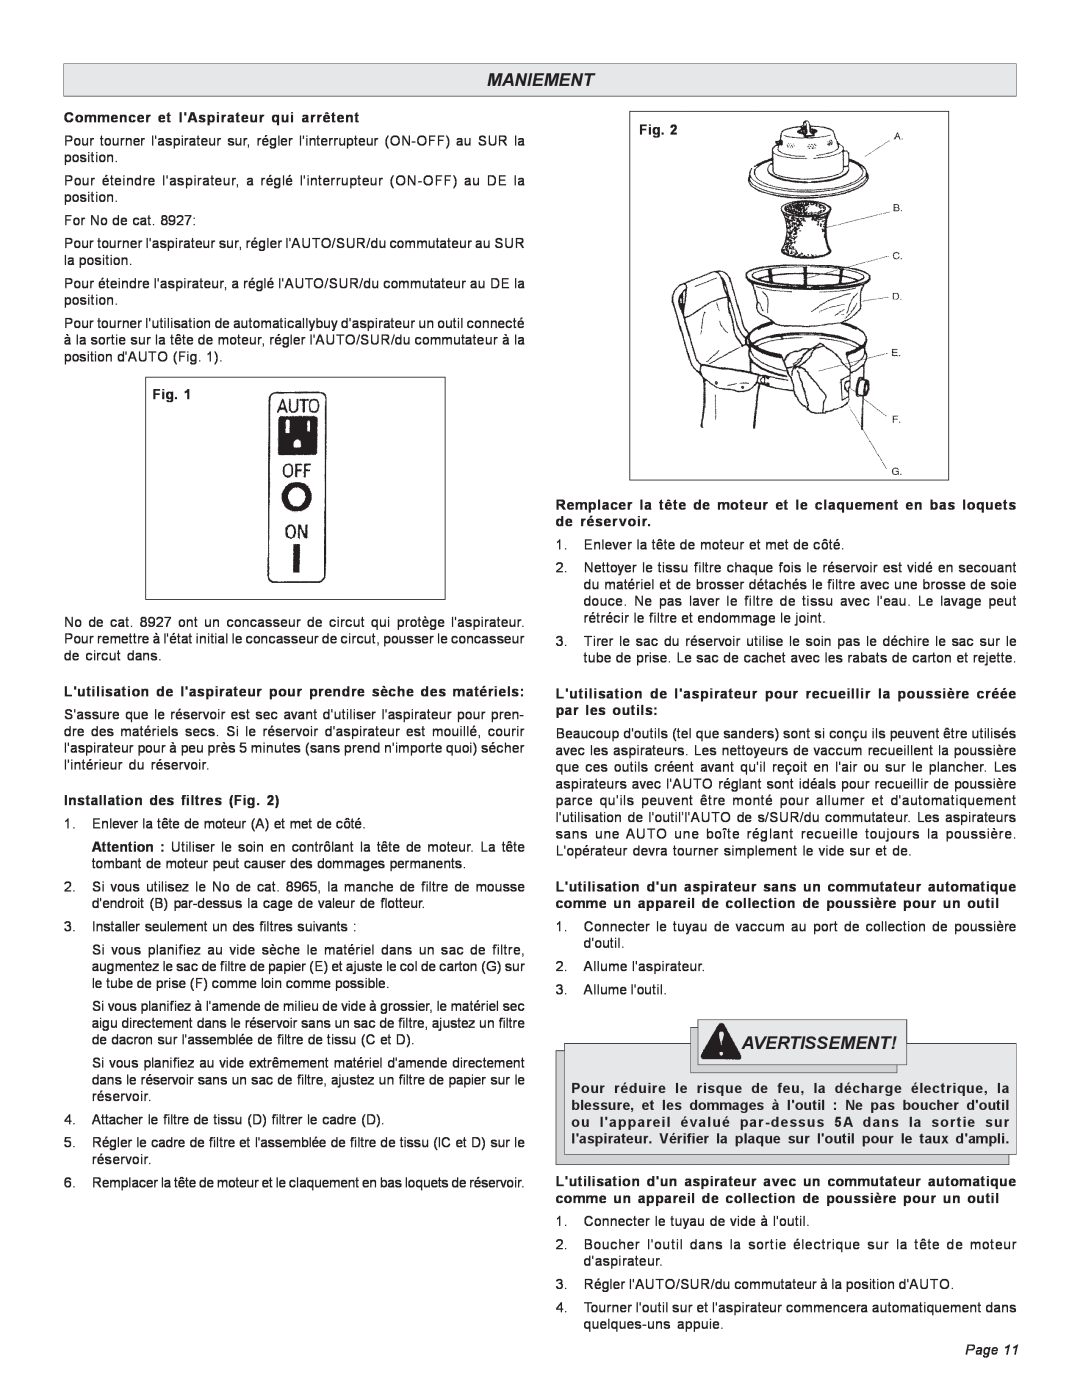 Milwaukee Heavy-Duty Commercial Vacuum manual Maniement, Avertissement, Page 